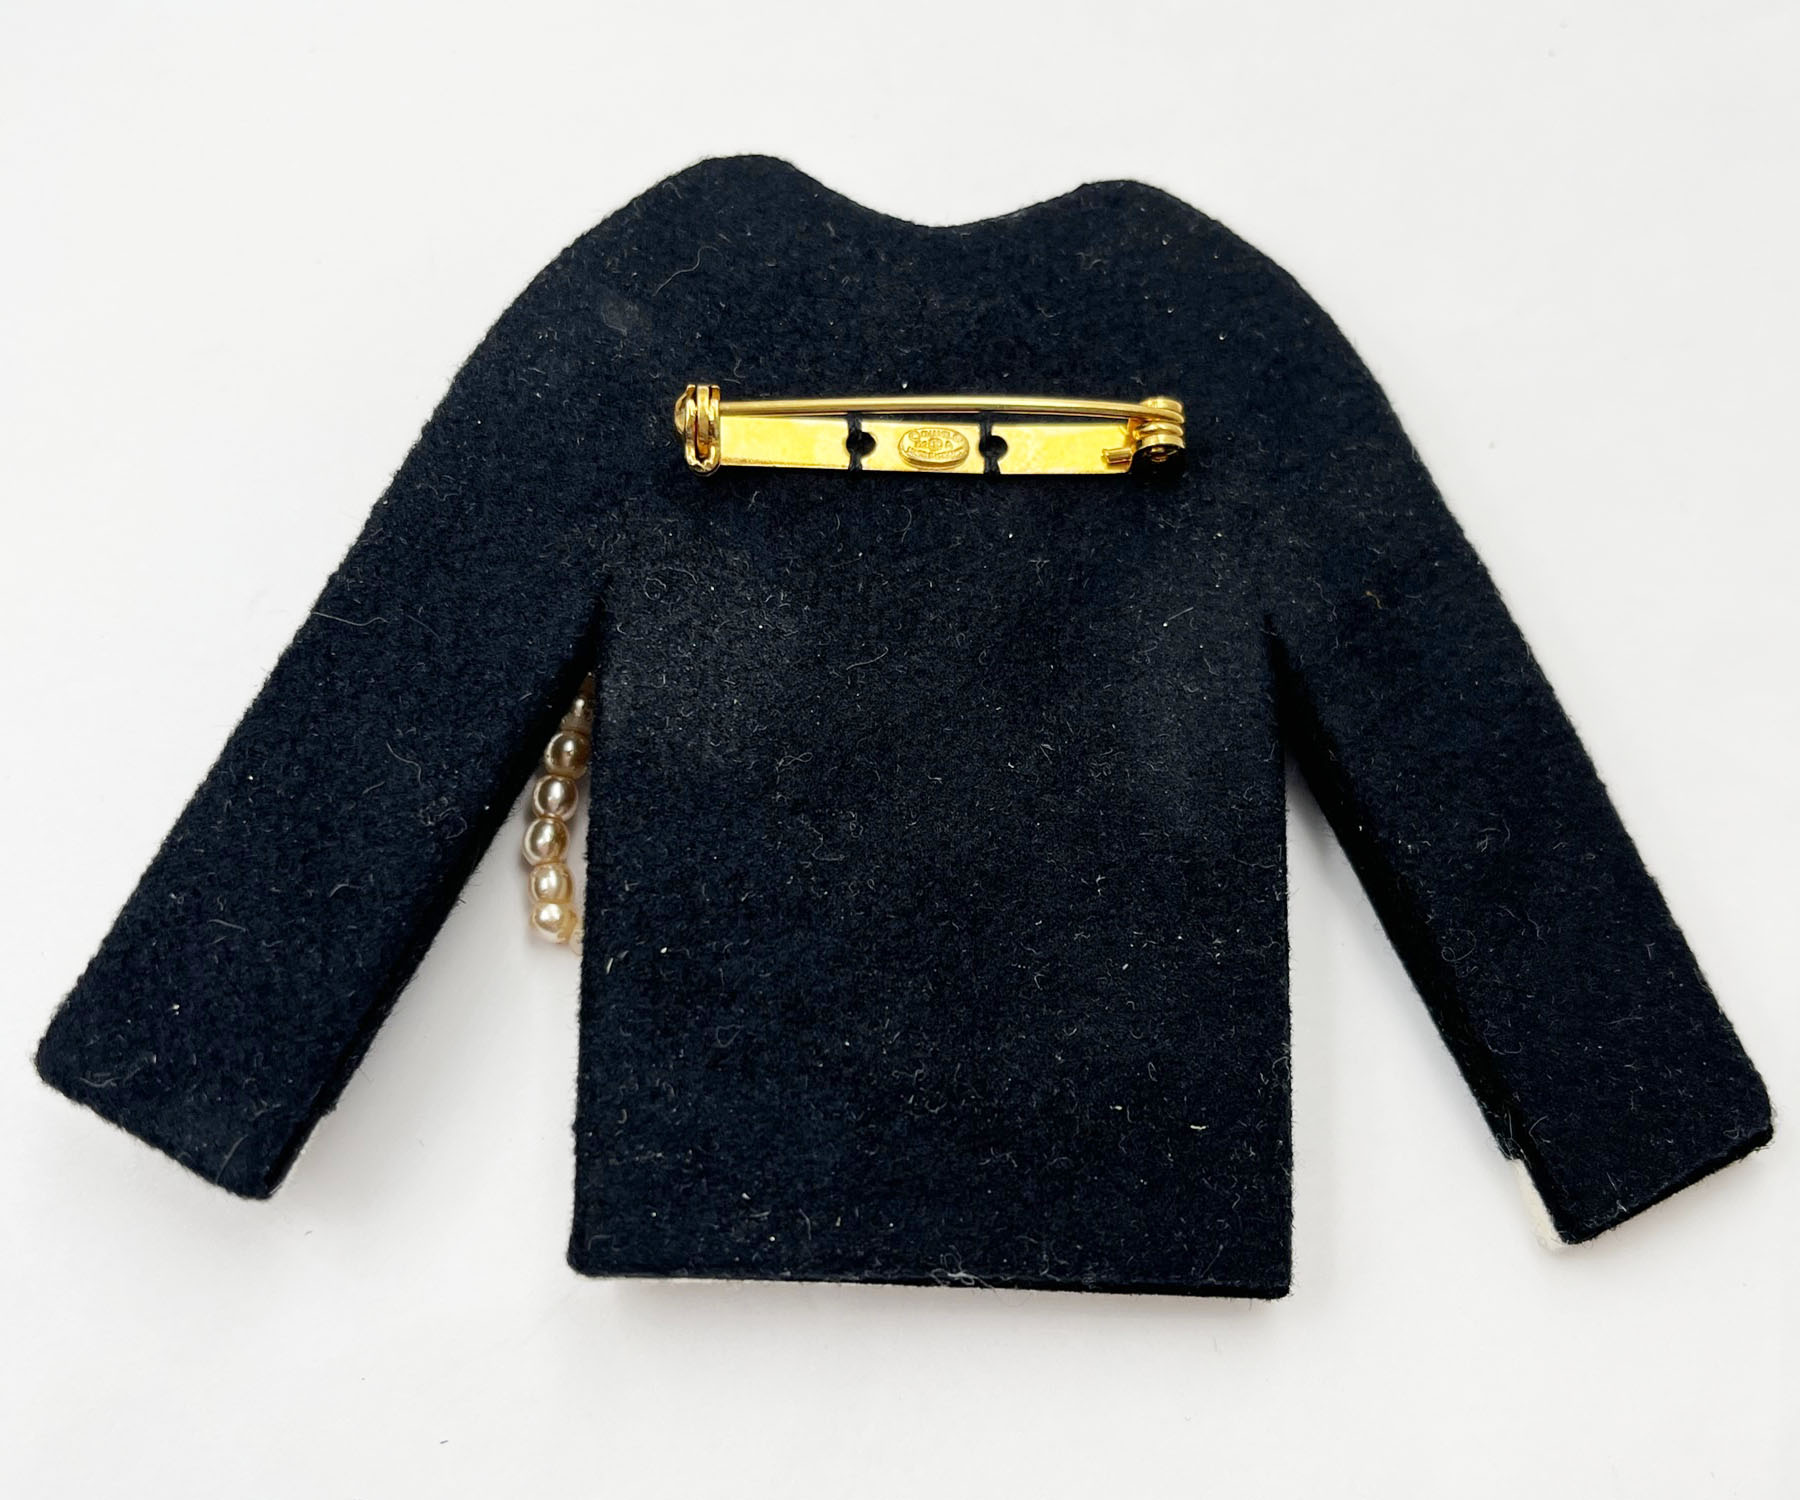 Chanel Rare Vintage Black CoCo Chanel Jacket Necklace Felt Large Brooch